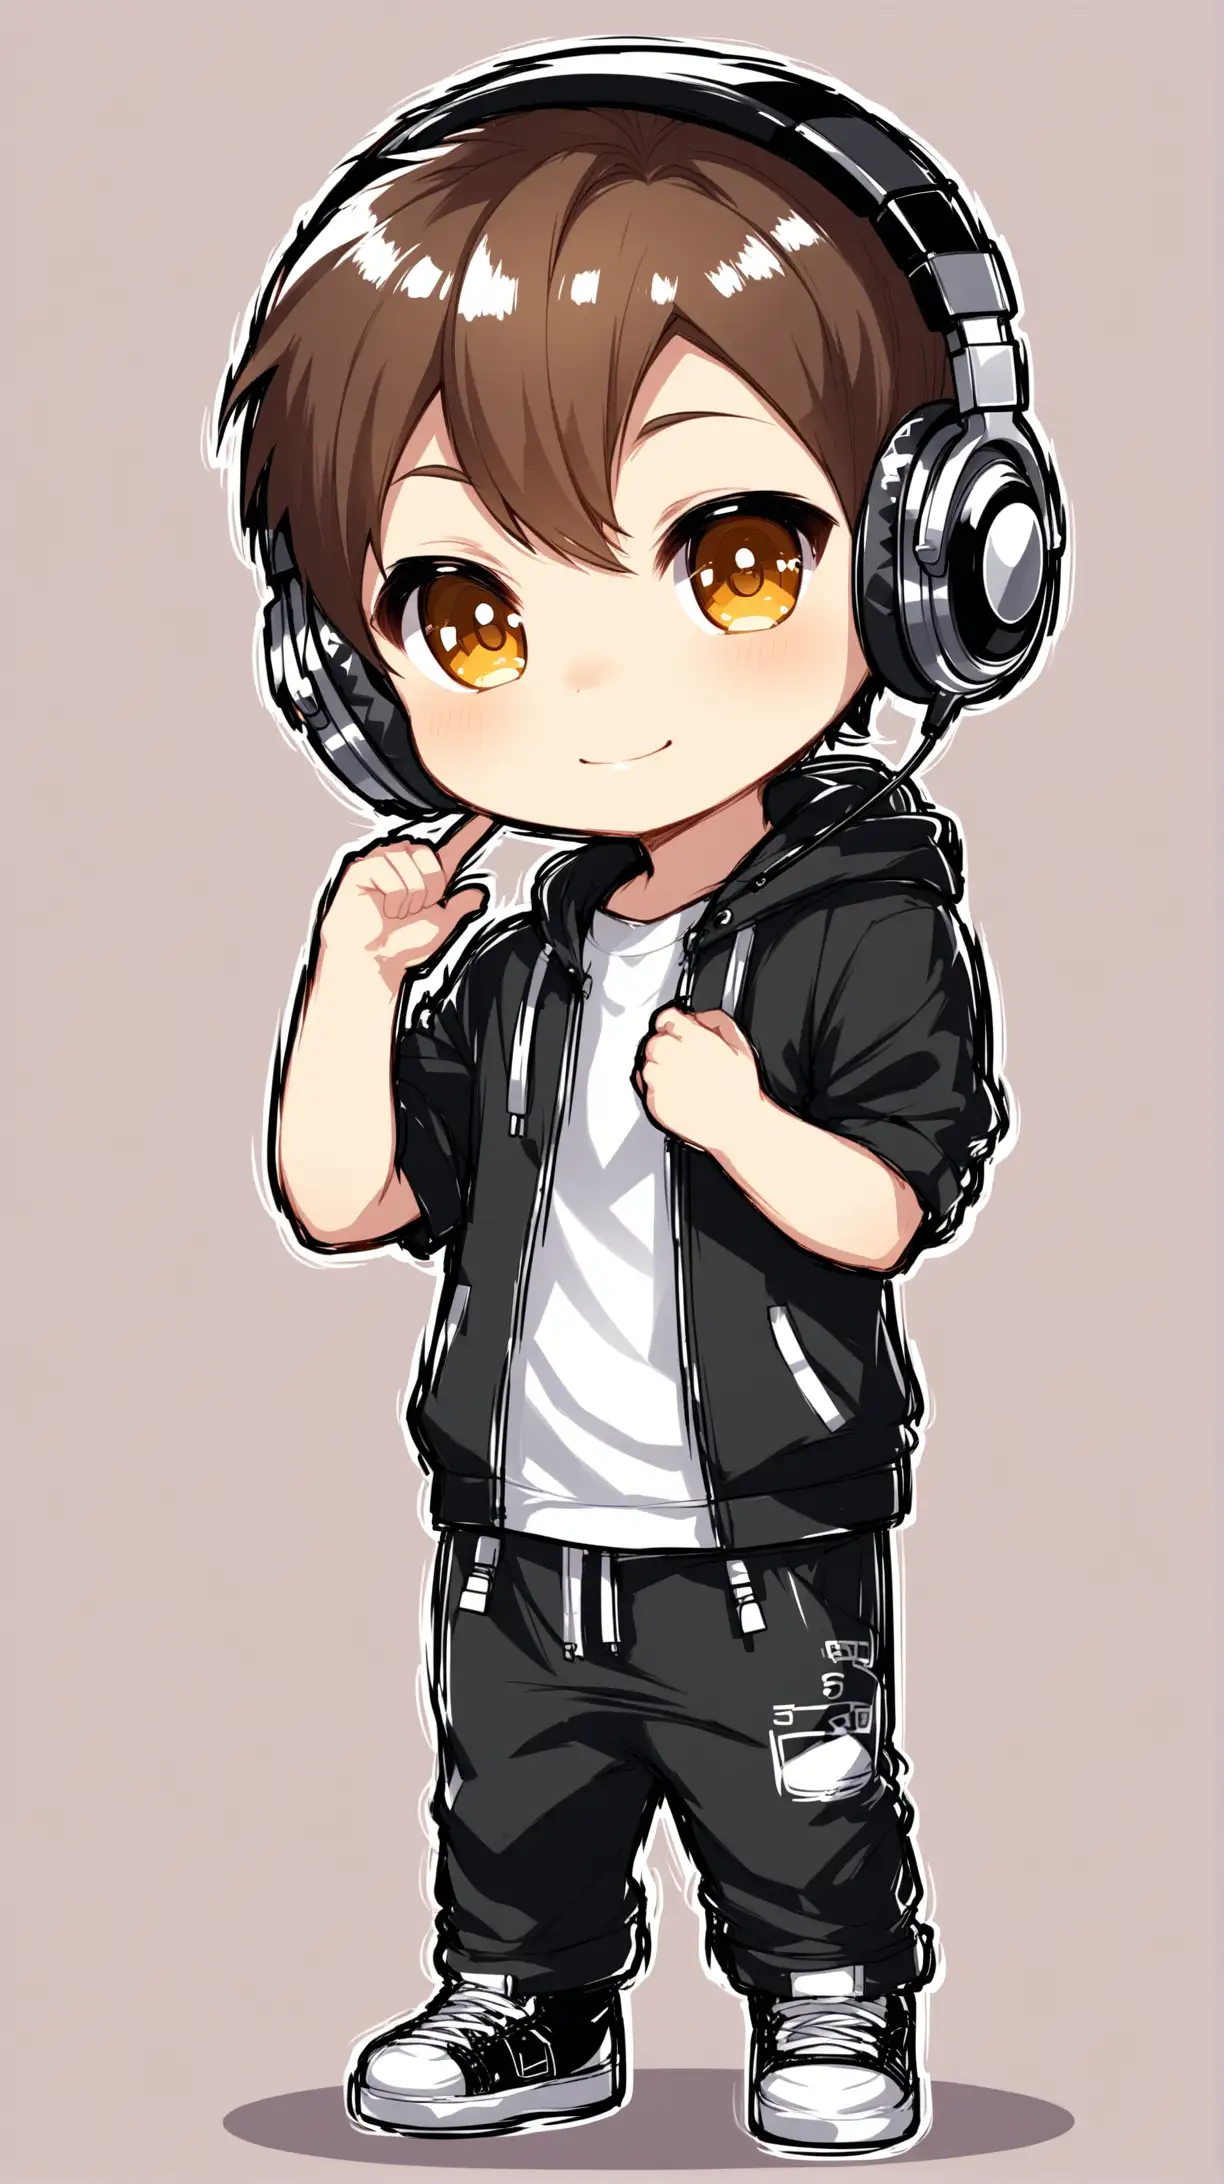 Chibi DJ Boy Wearing Headphones and Mixing Music